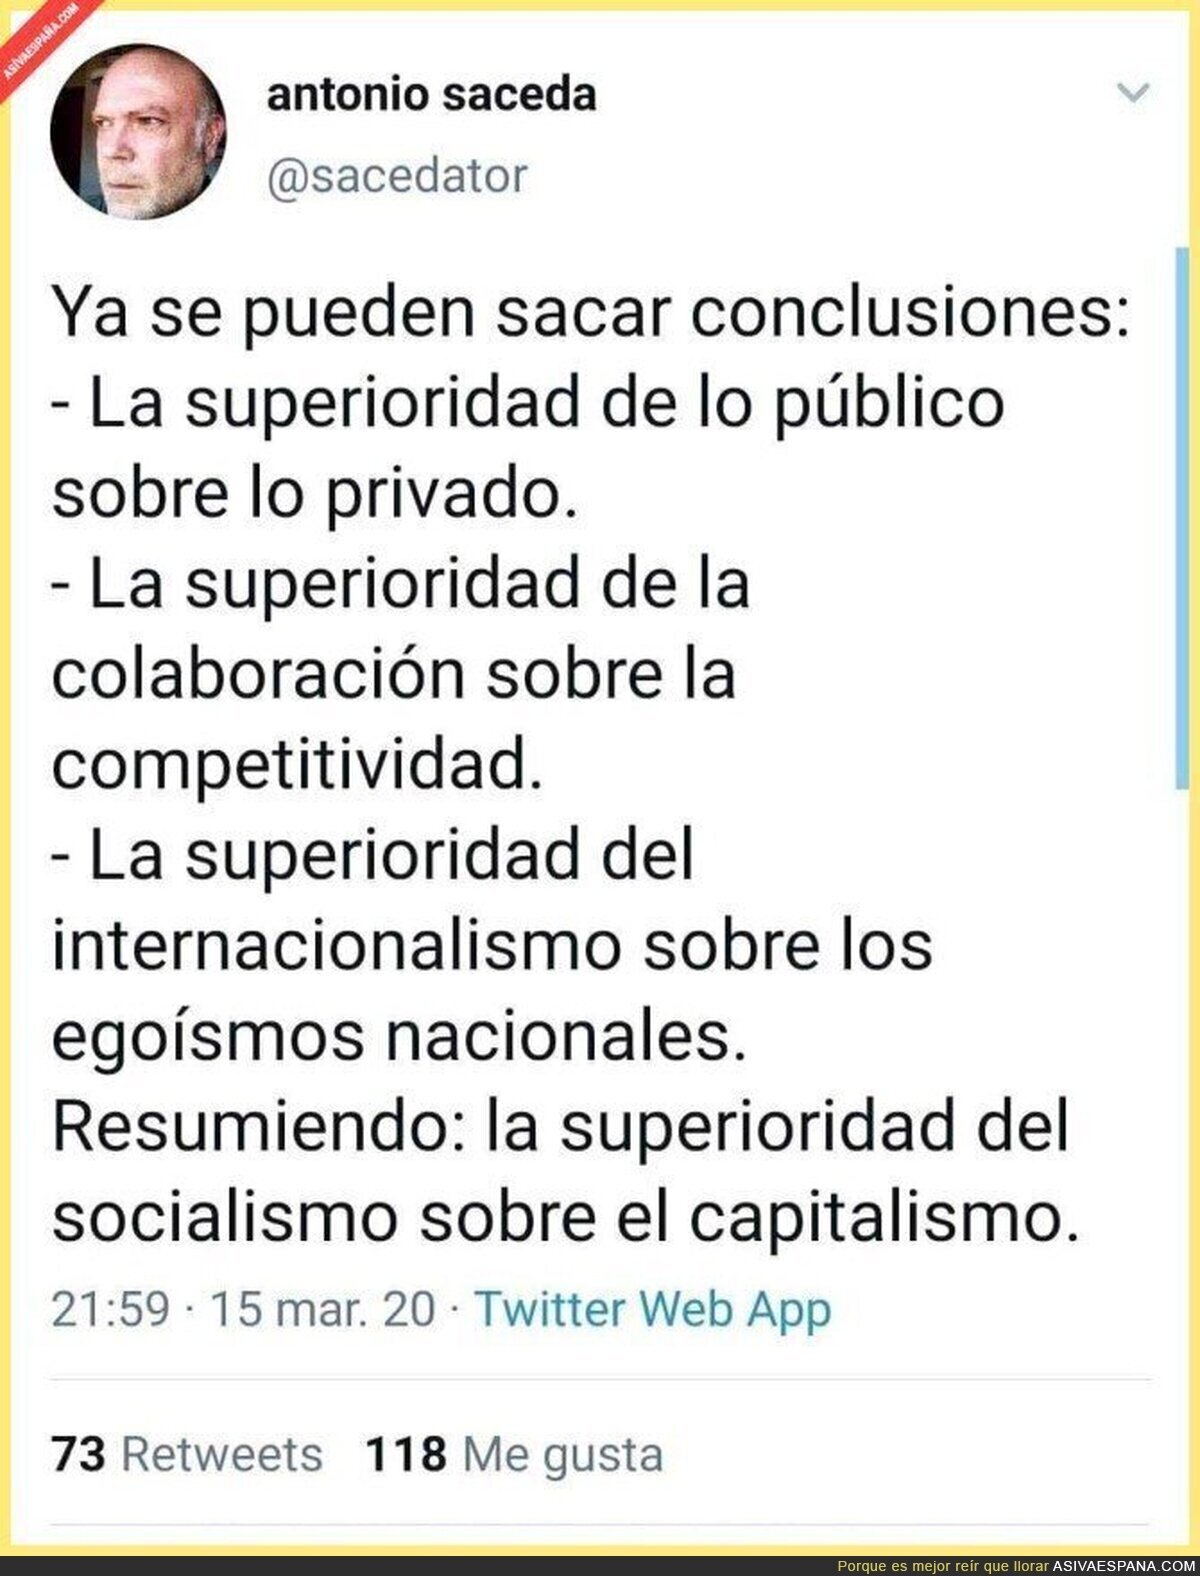 Socialismo > capitalismo